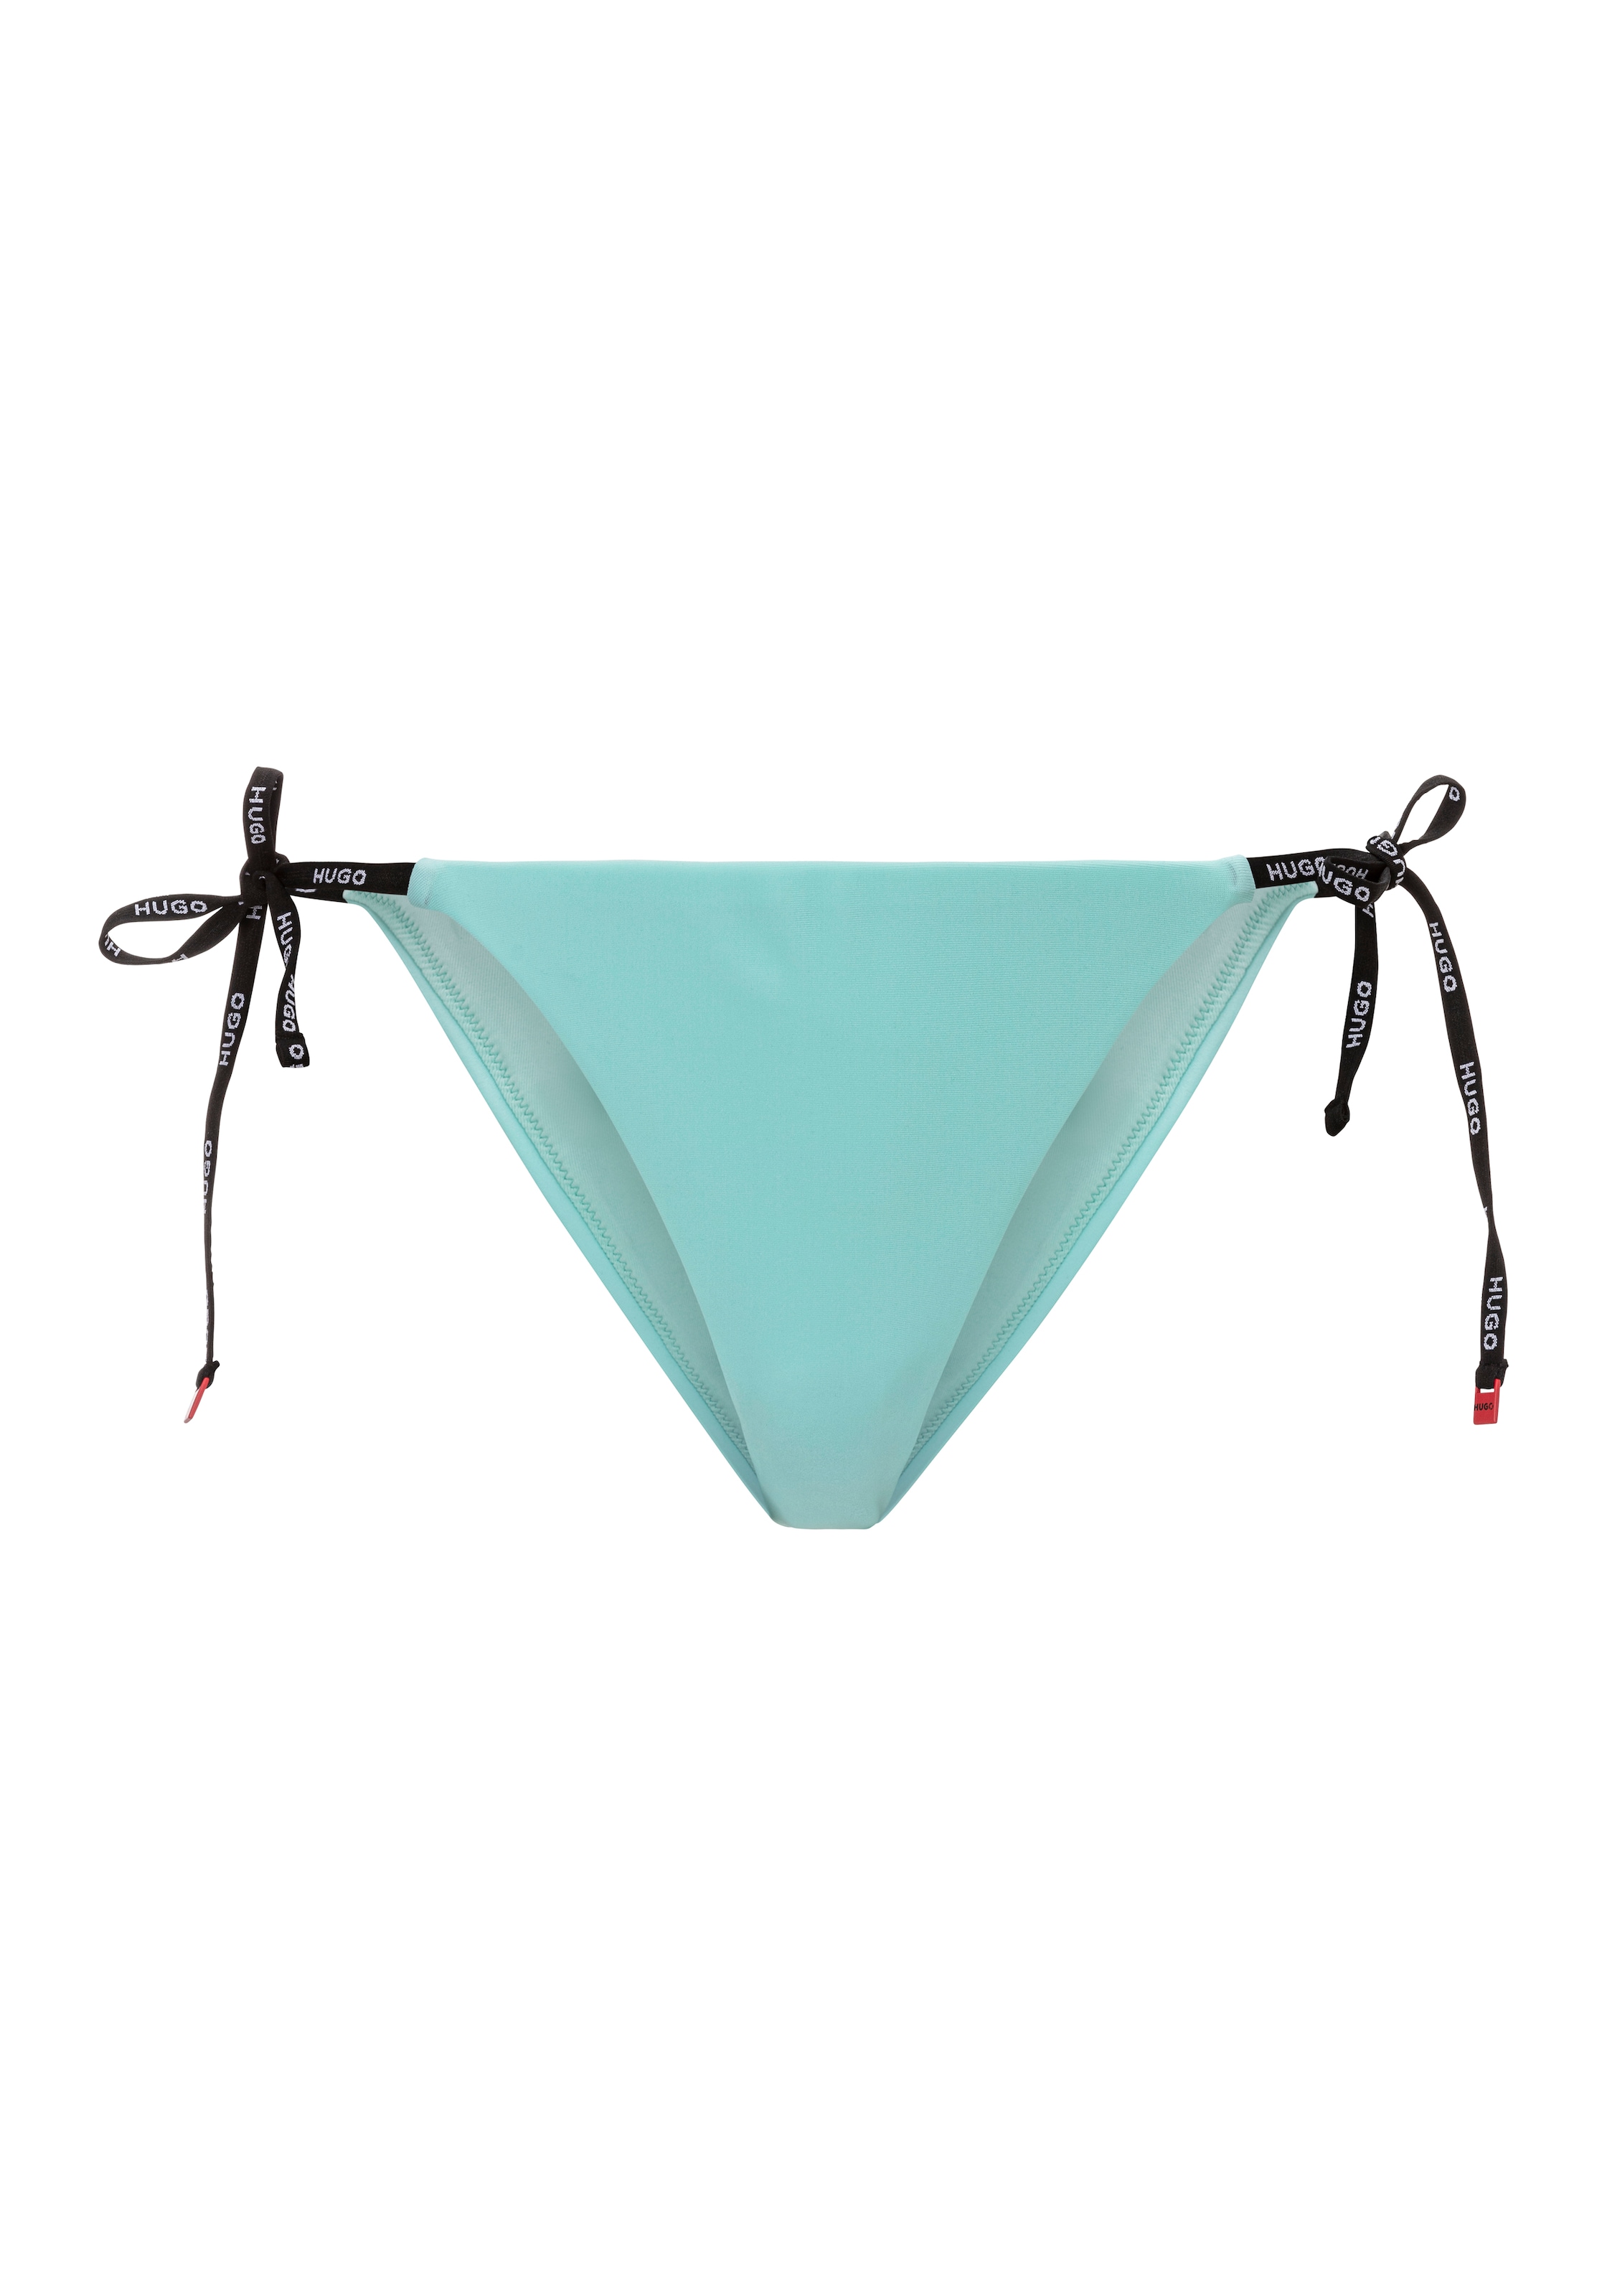 HUGO Underwear Bikini-Hose »PURE_SIDE TIE 10241961 01«, mit Metalllogoelementen